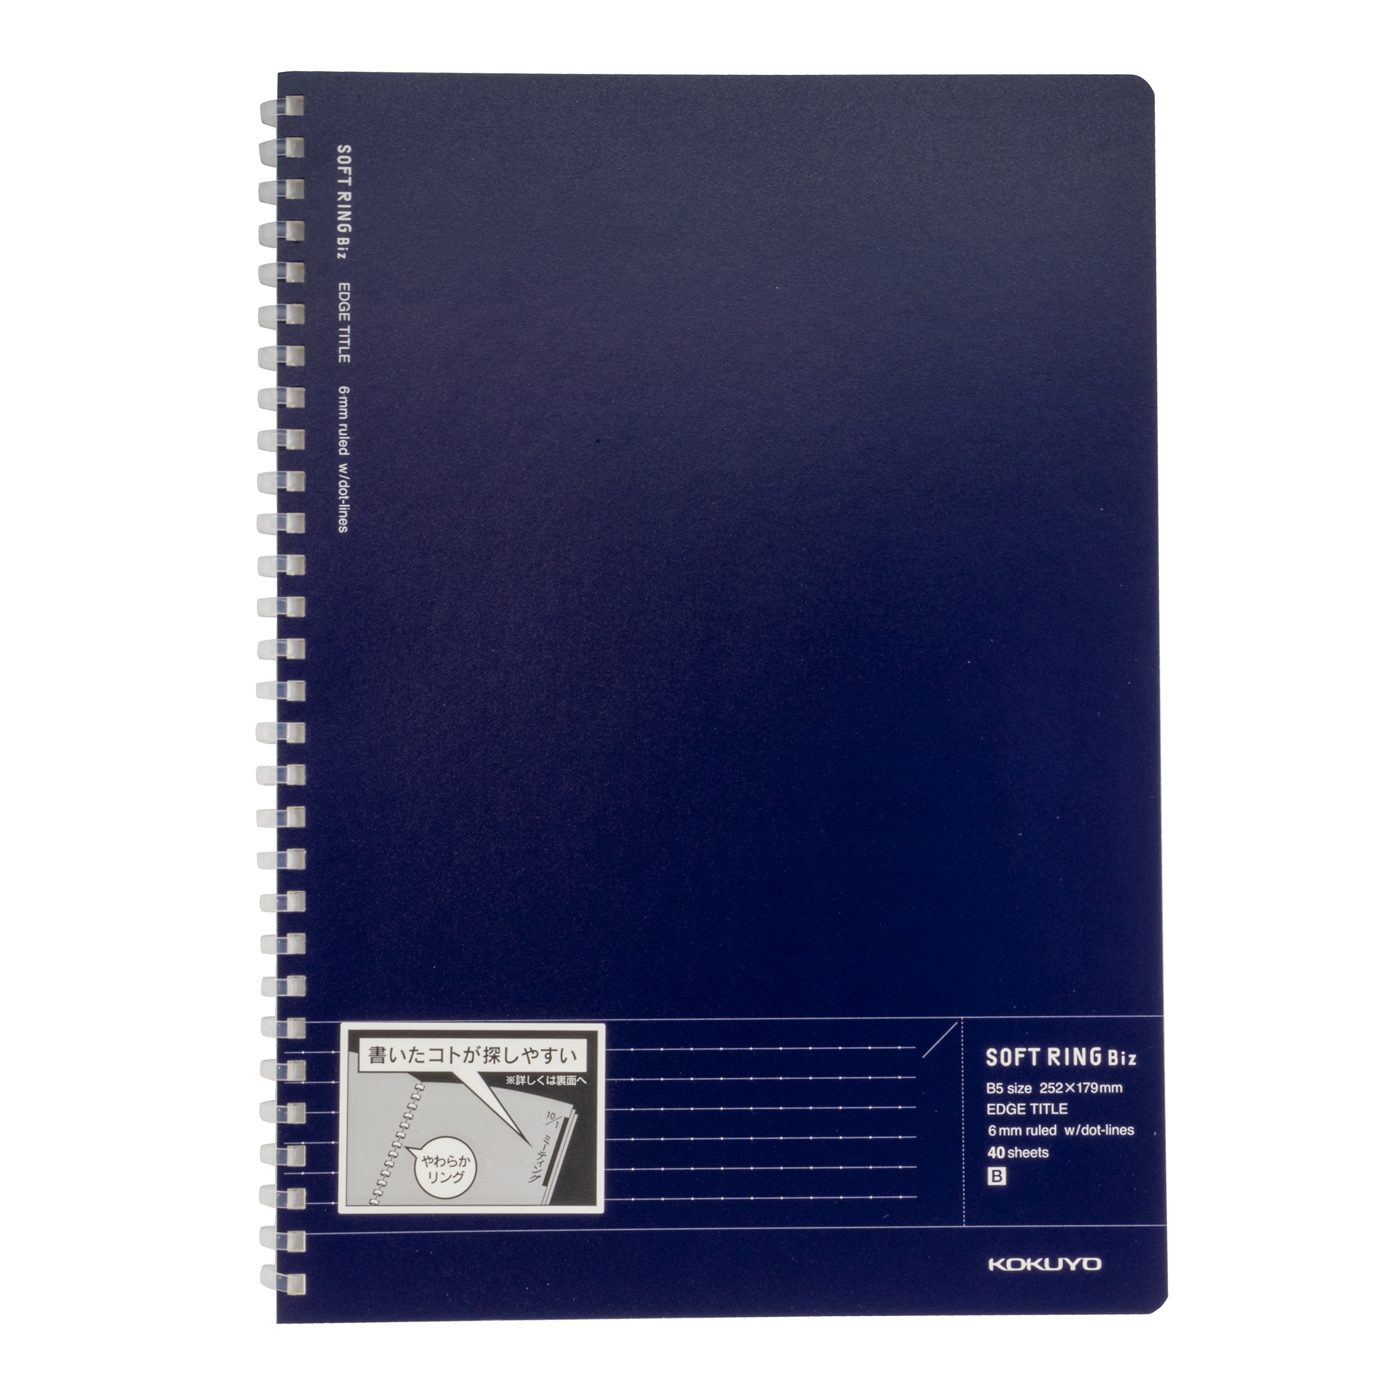 Kokuyo Biz B5 Soft Ring Notebook- Blue